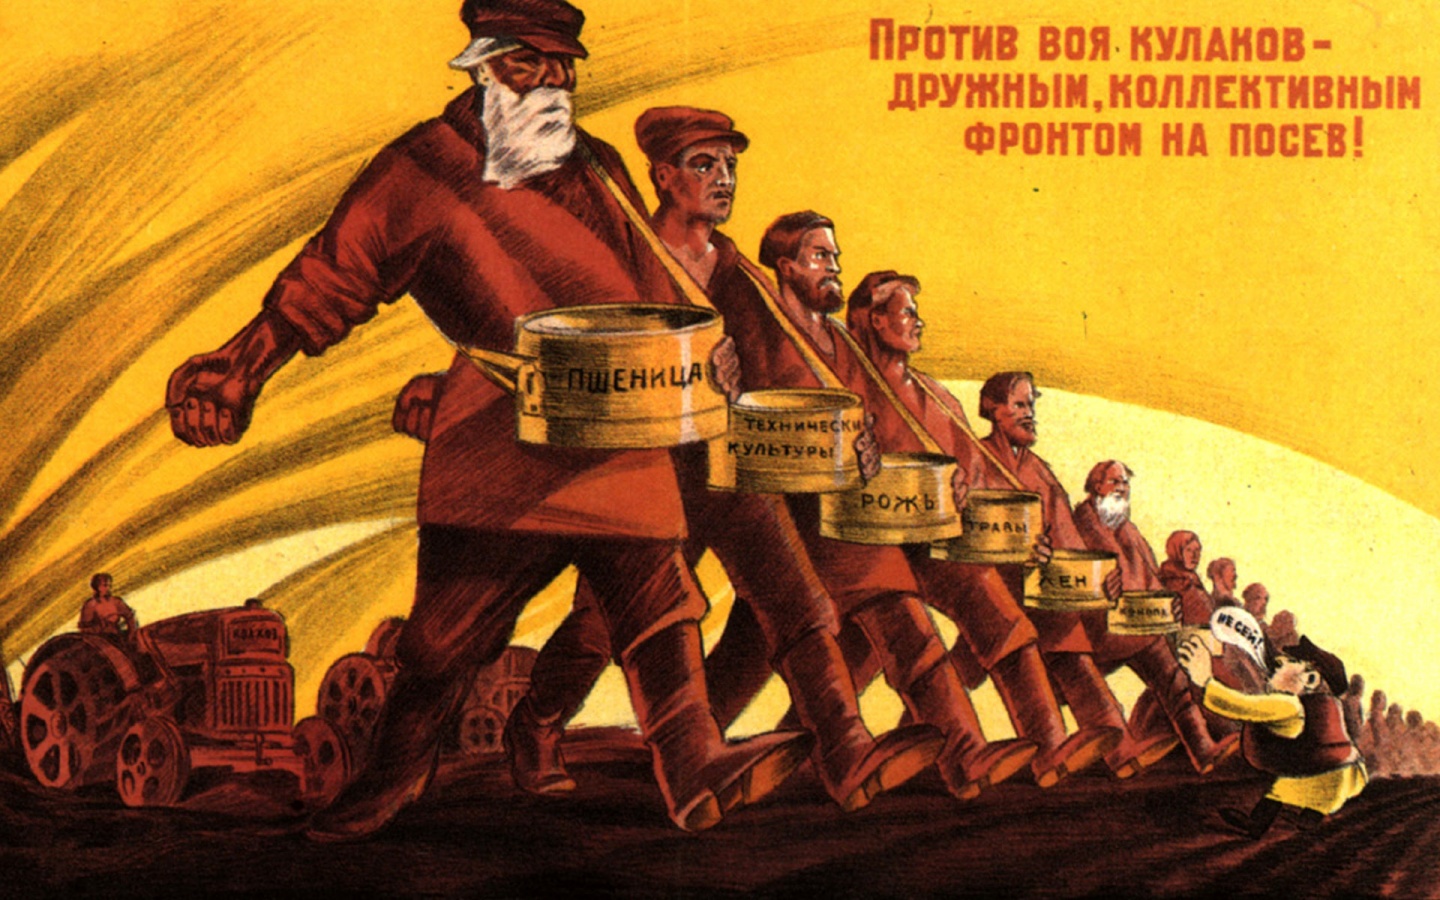 soviet-union-propaganda-1440x900.jpg